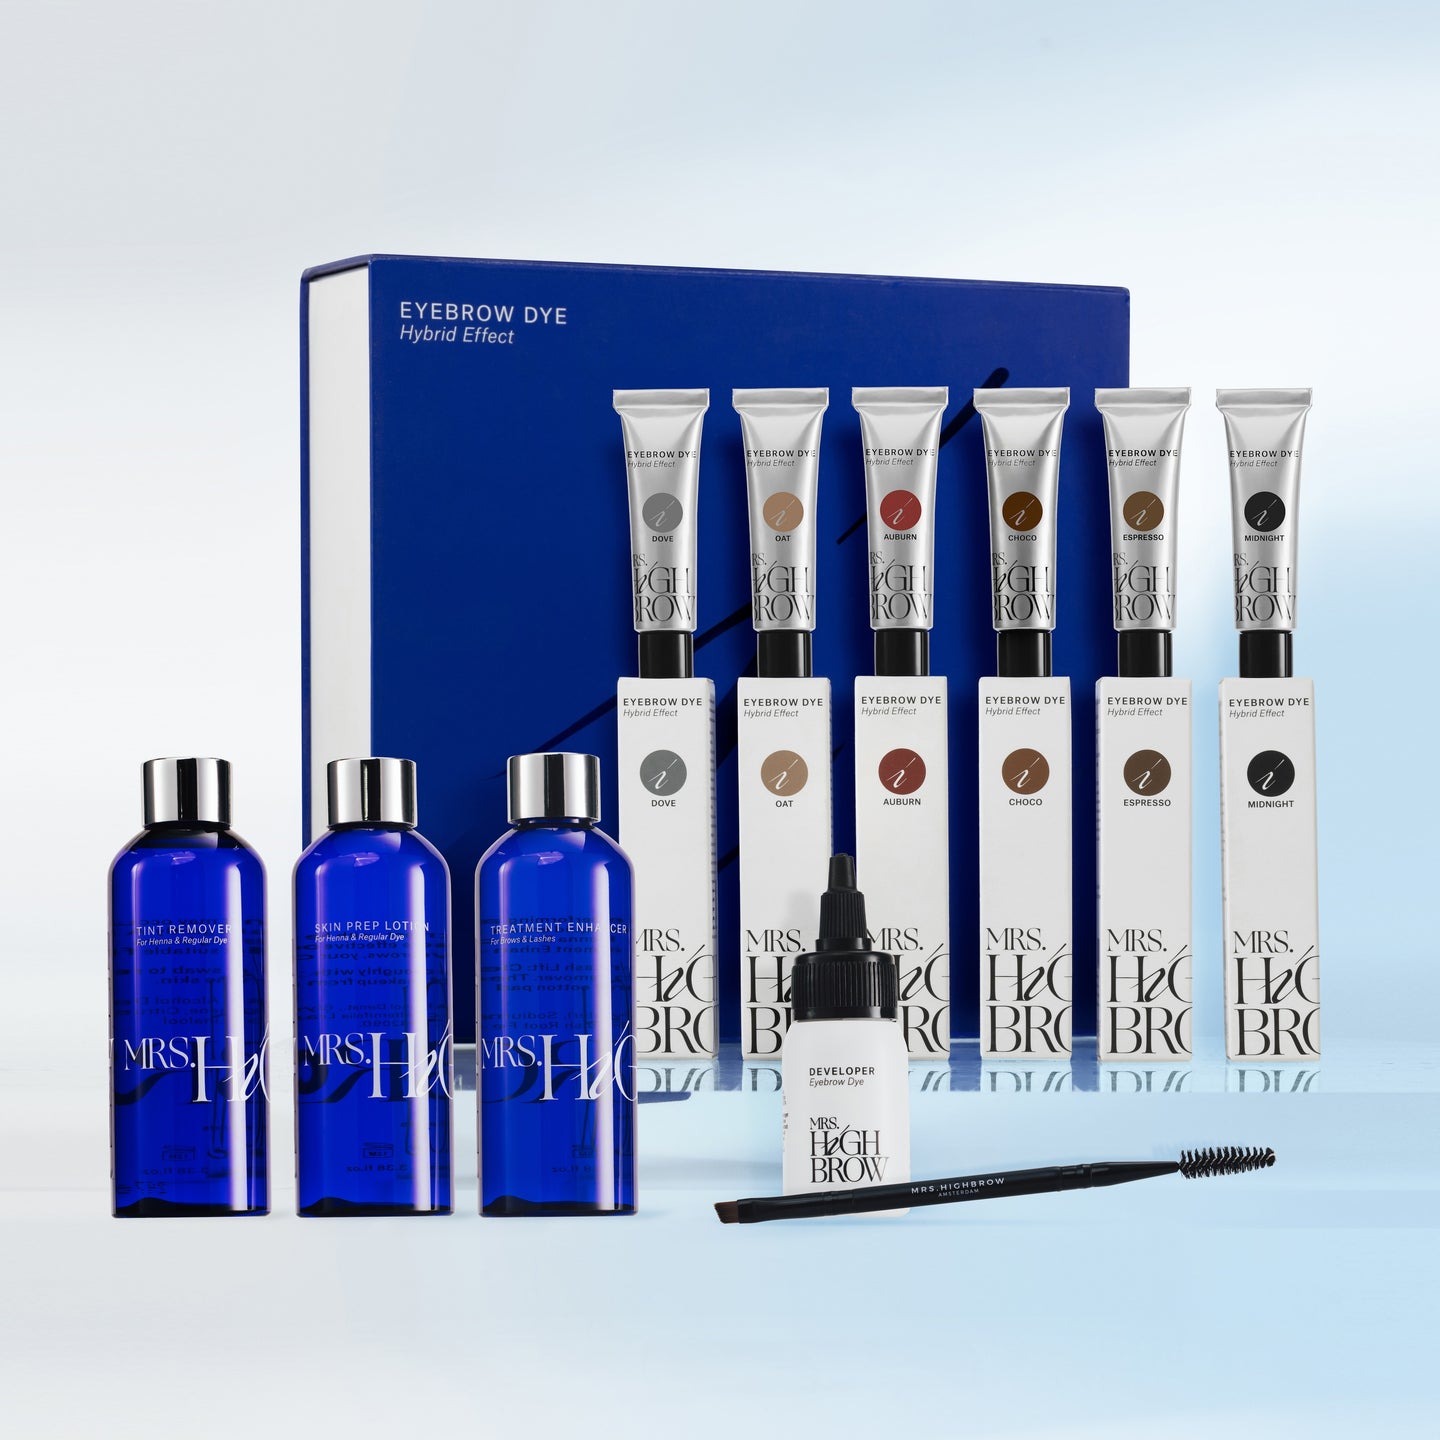 blauw box met diverse producten voor hybrid dye van mrshighbrow zoals tubes verf en skin prep lotion tint remover en treatment enhancer voor bold hybrid brows